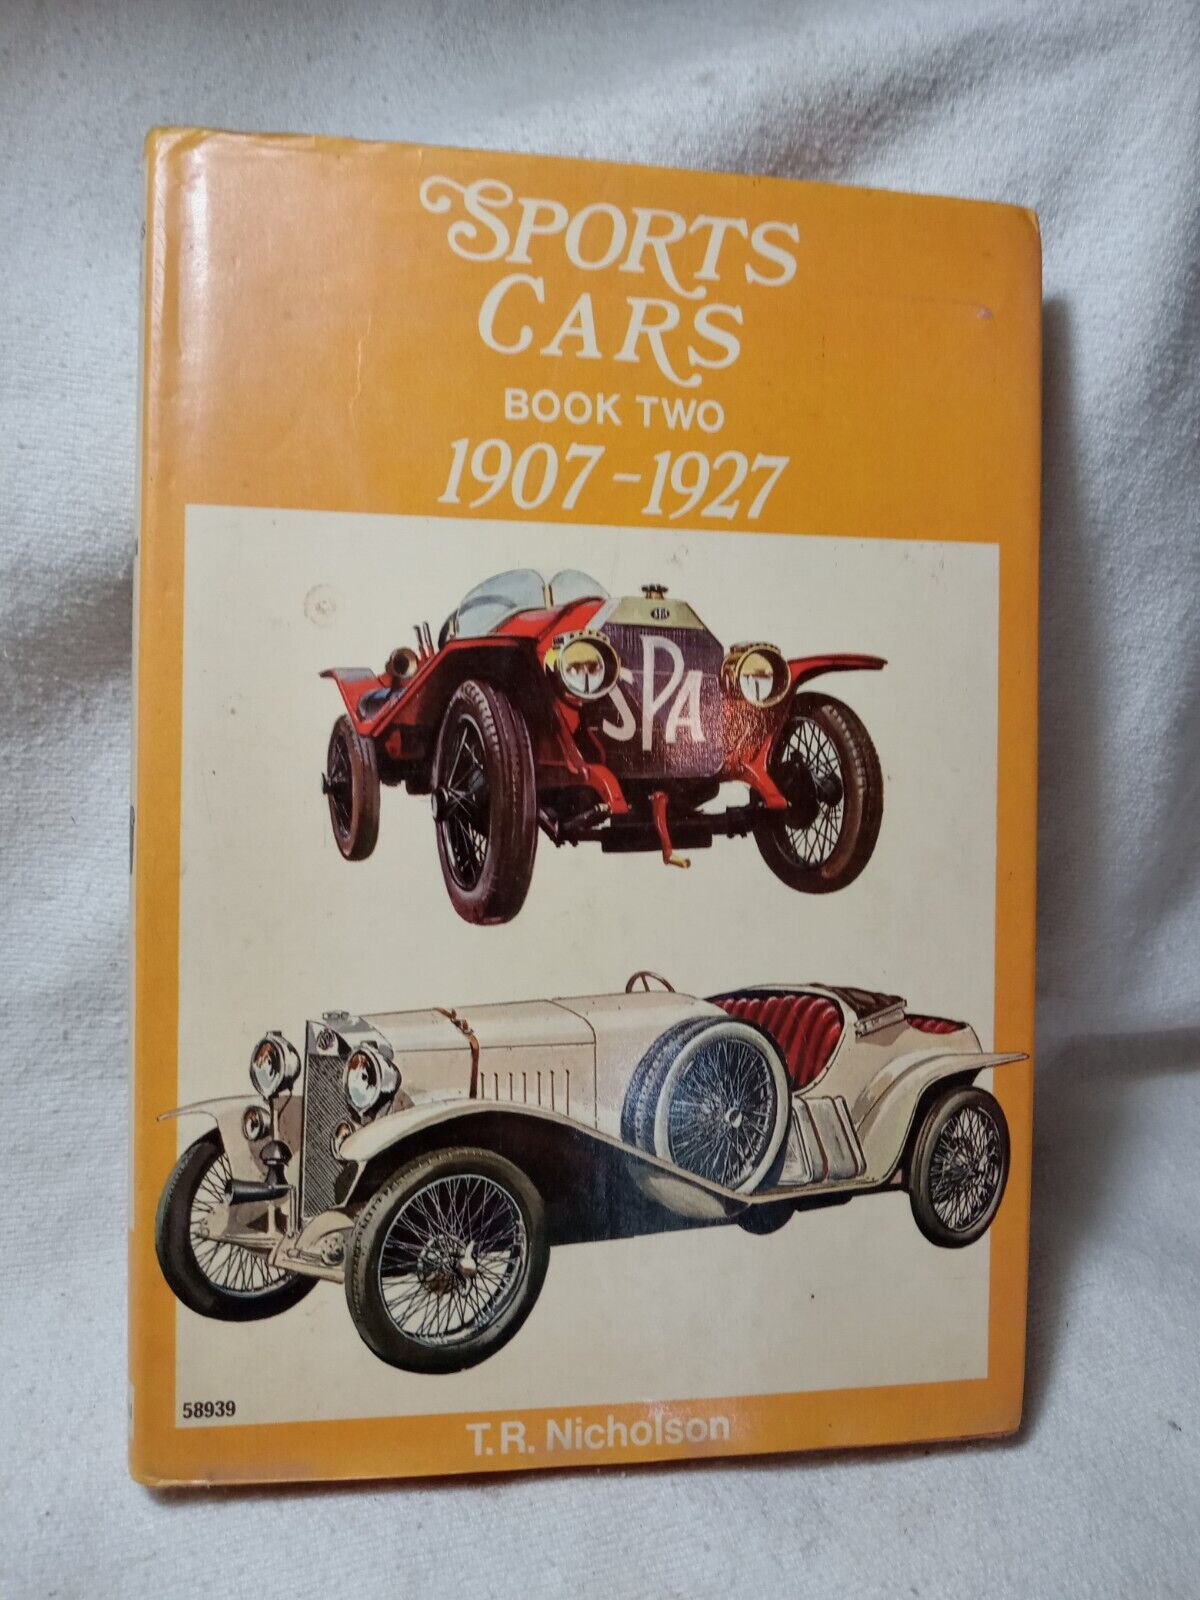 Sports Cars Book Two 1907-1927 T.R. Nicholson 1970 First American Edition (R293)